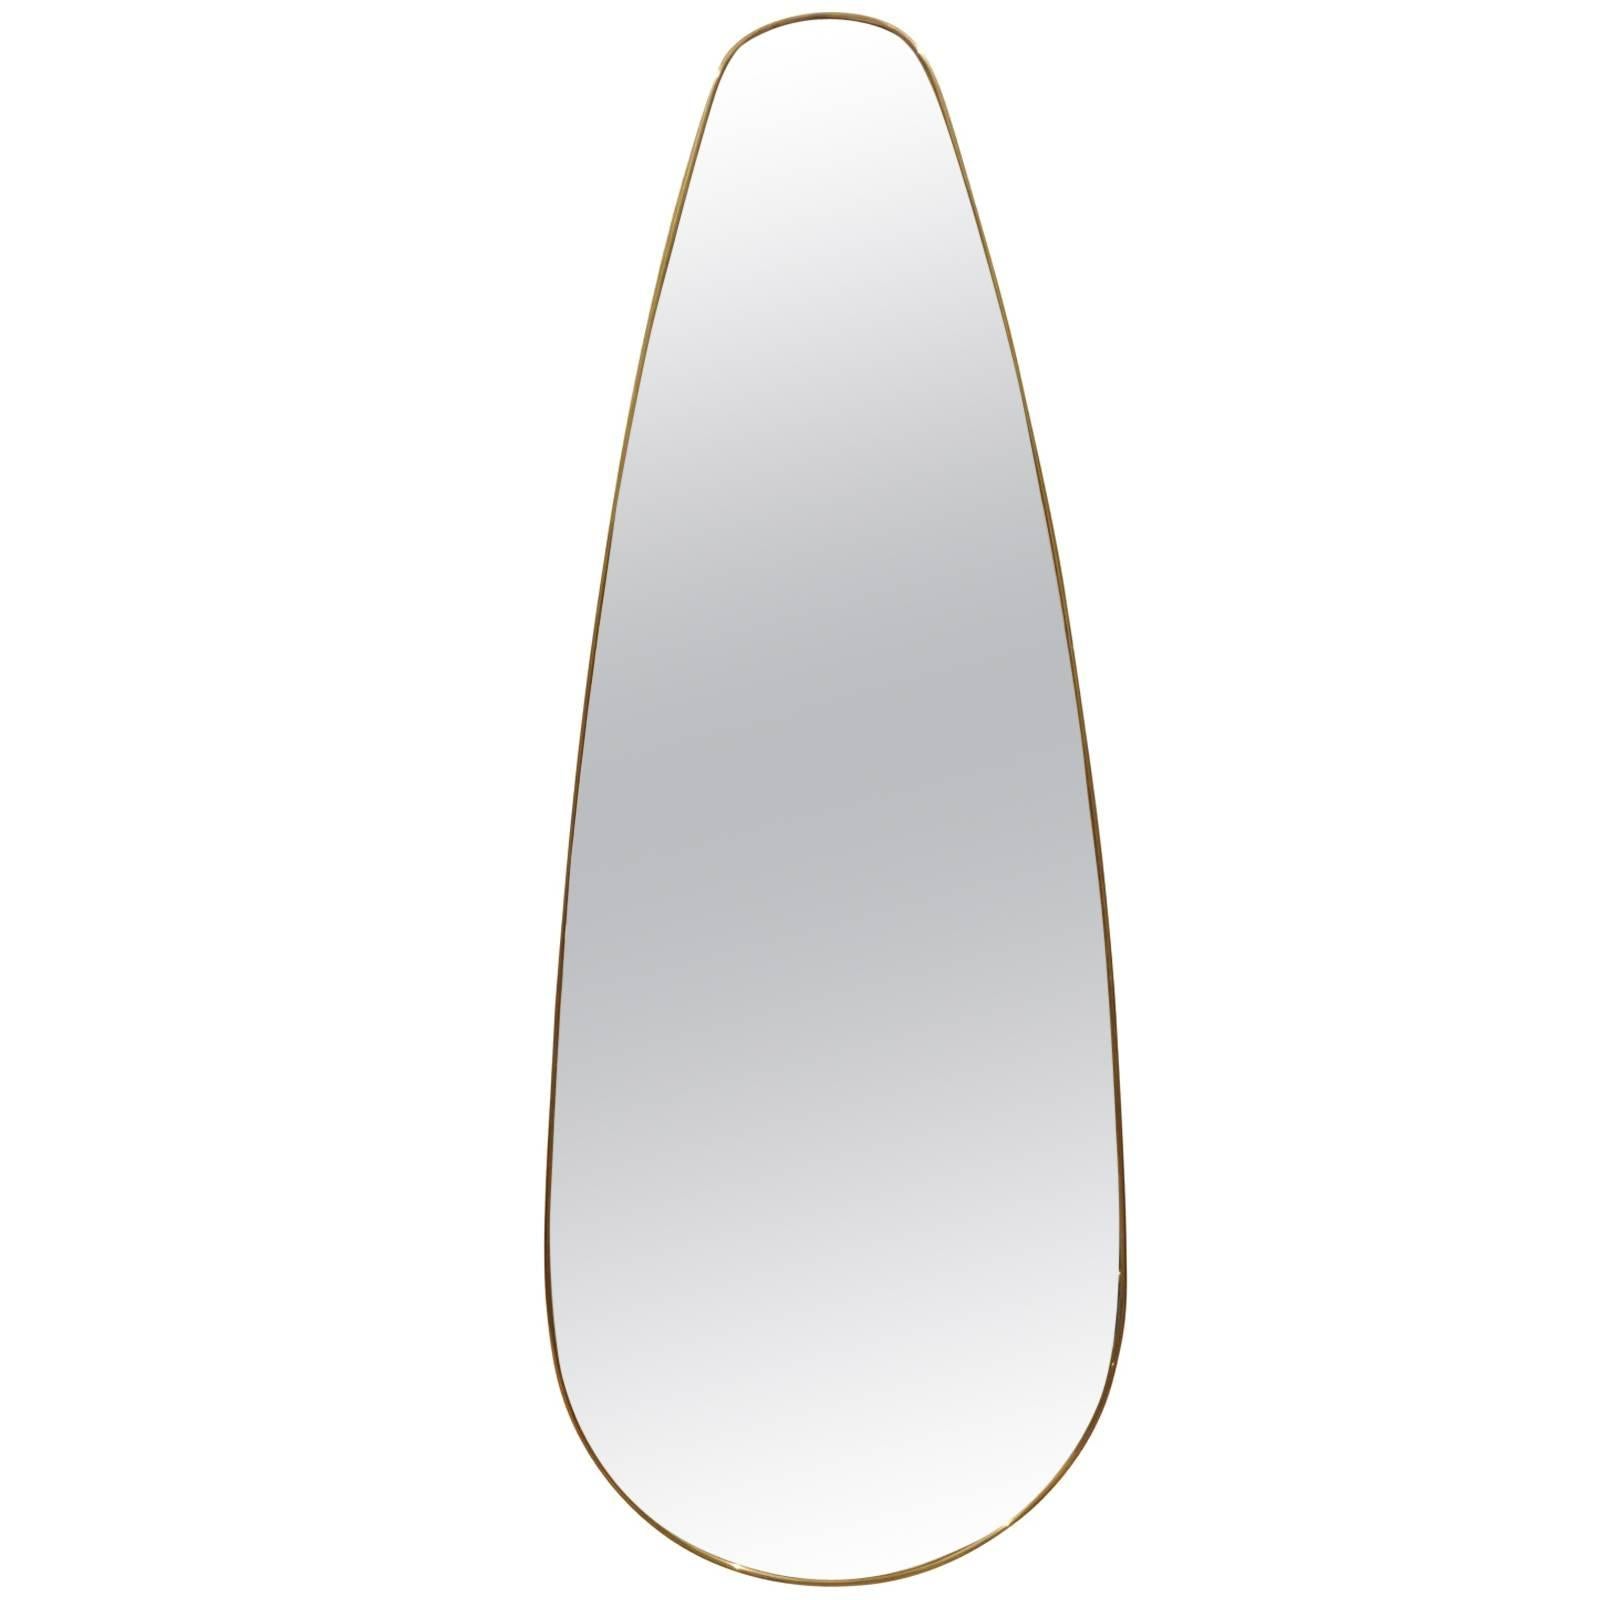 Vintage Italian 1970s Unusual Oval Tall Teardrop Shaped Mirror with Brass Frame